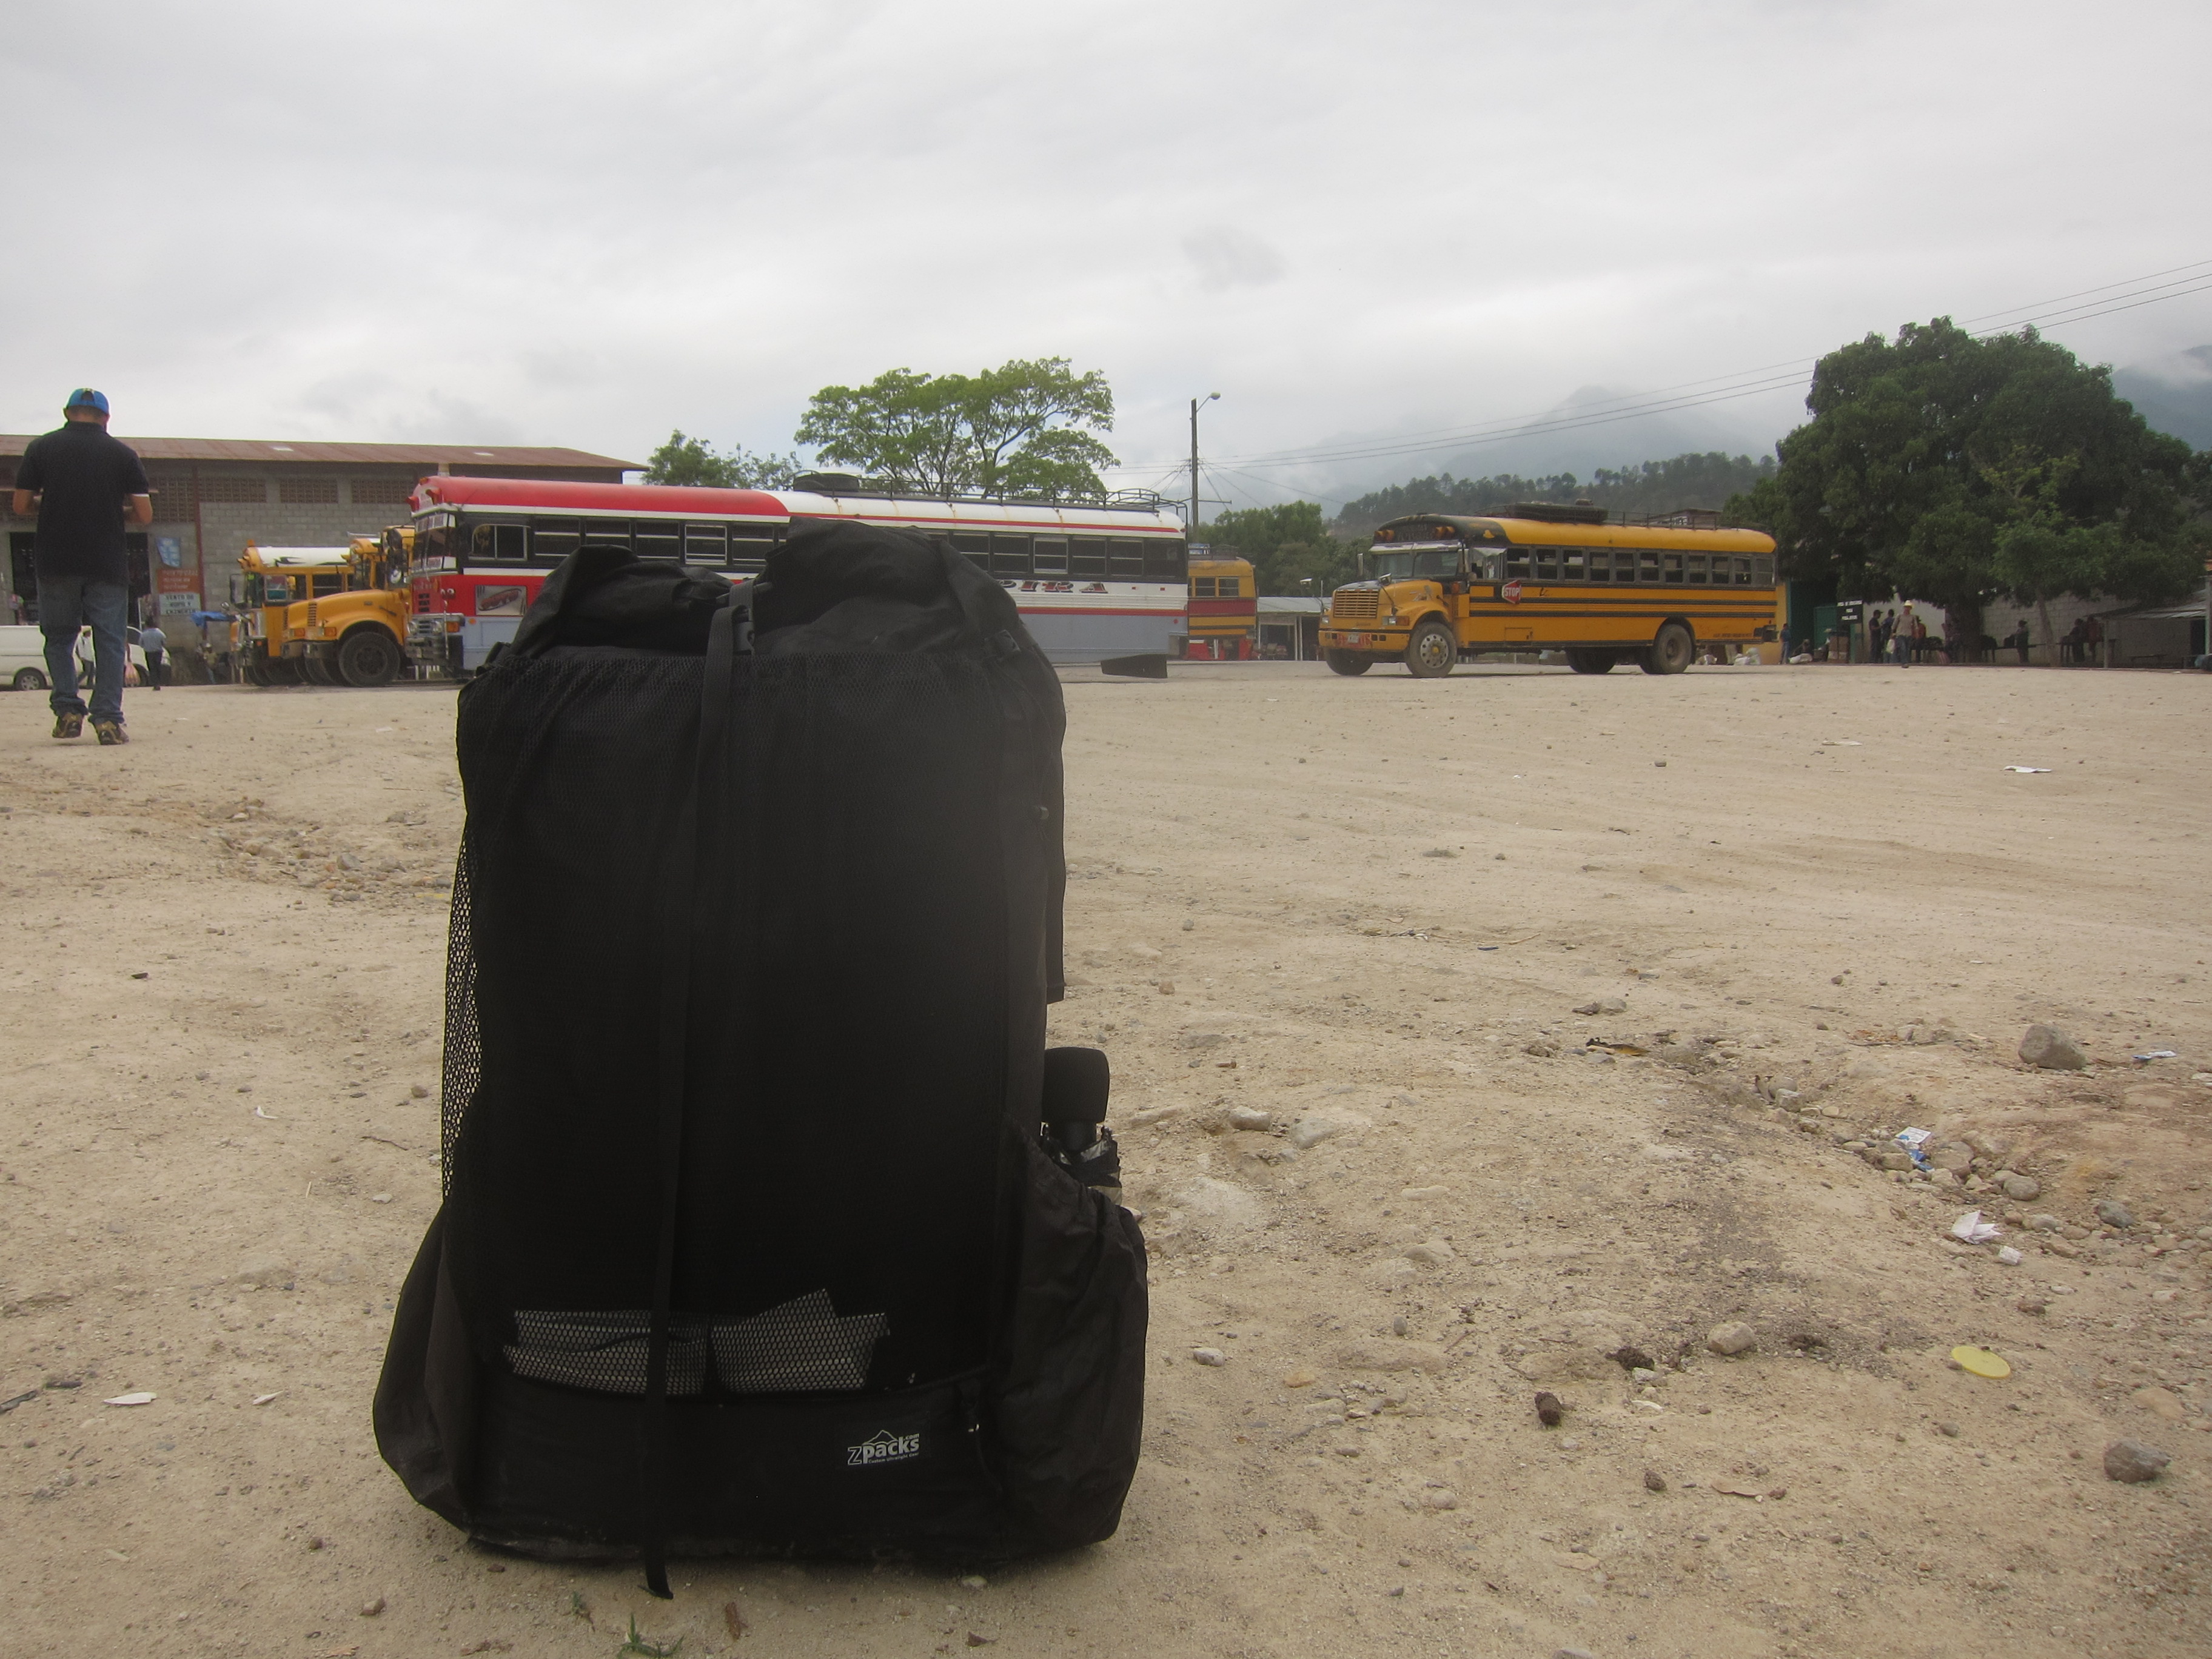 backpack at a bus station in Gracias, Honduras